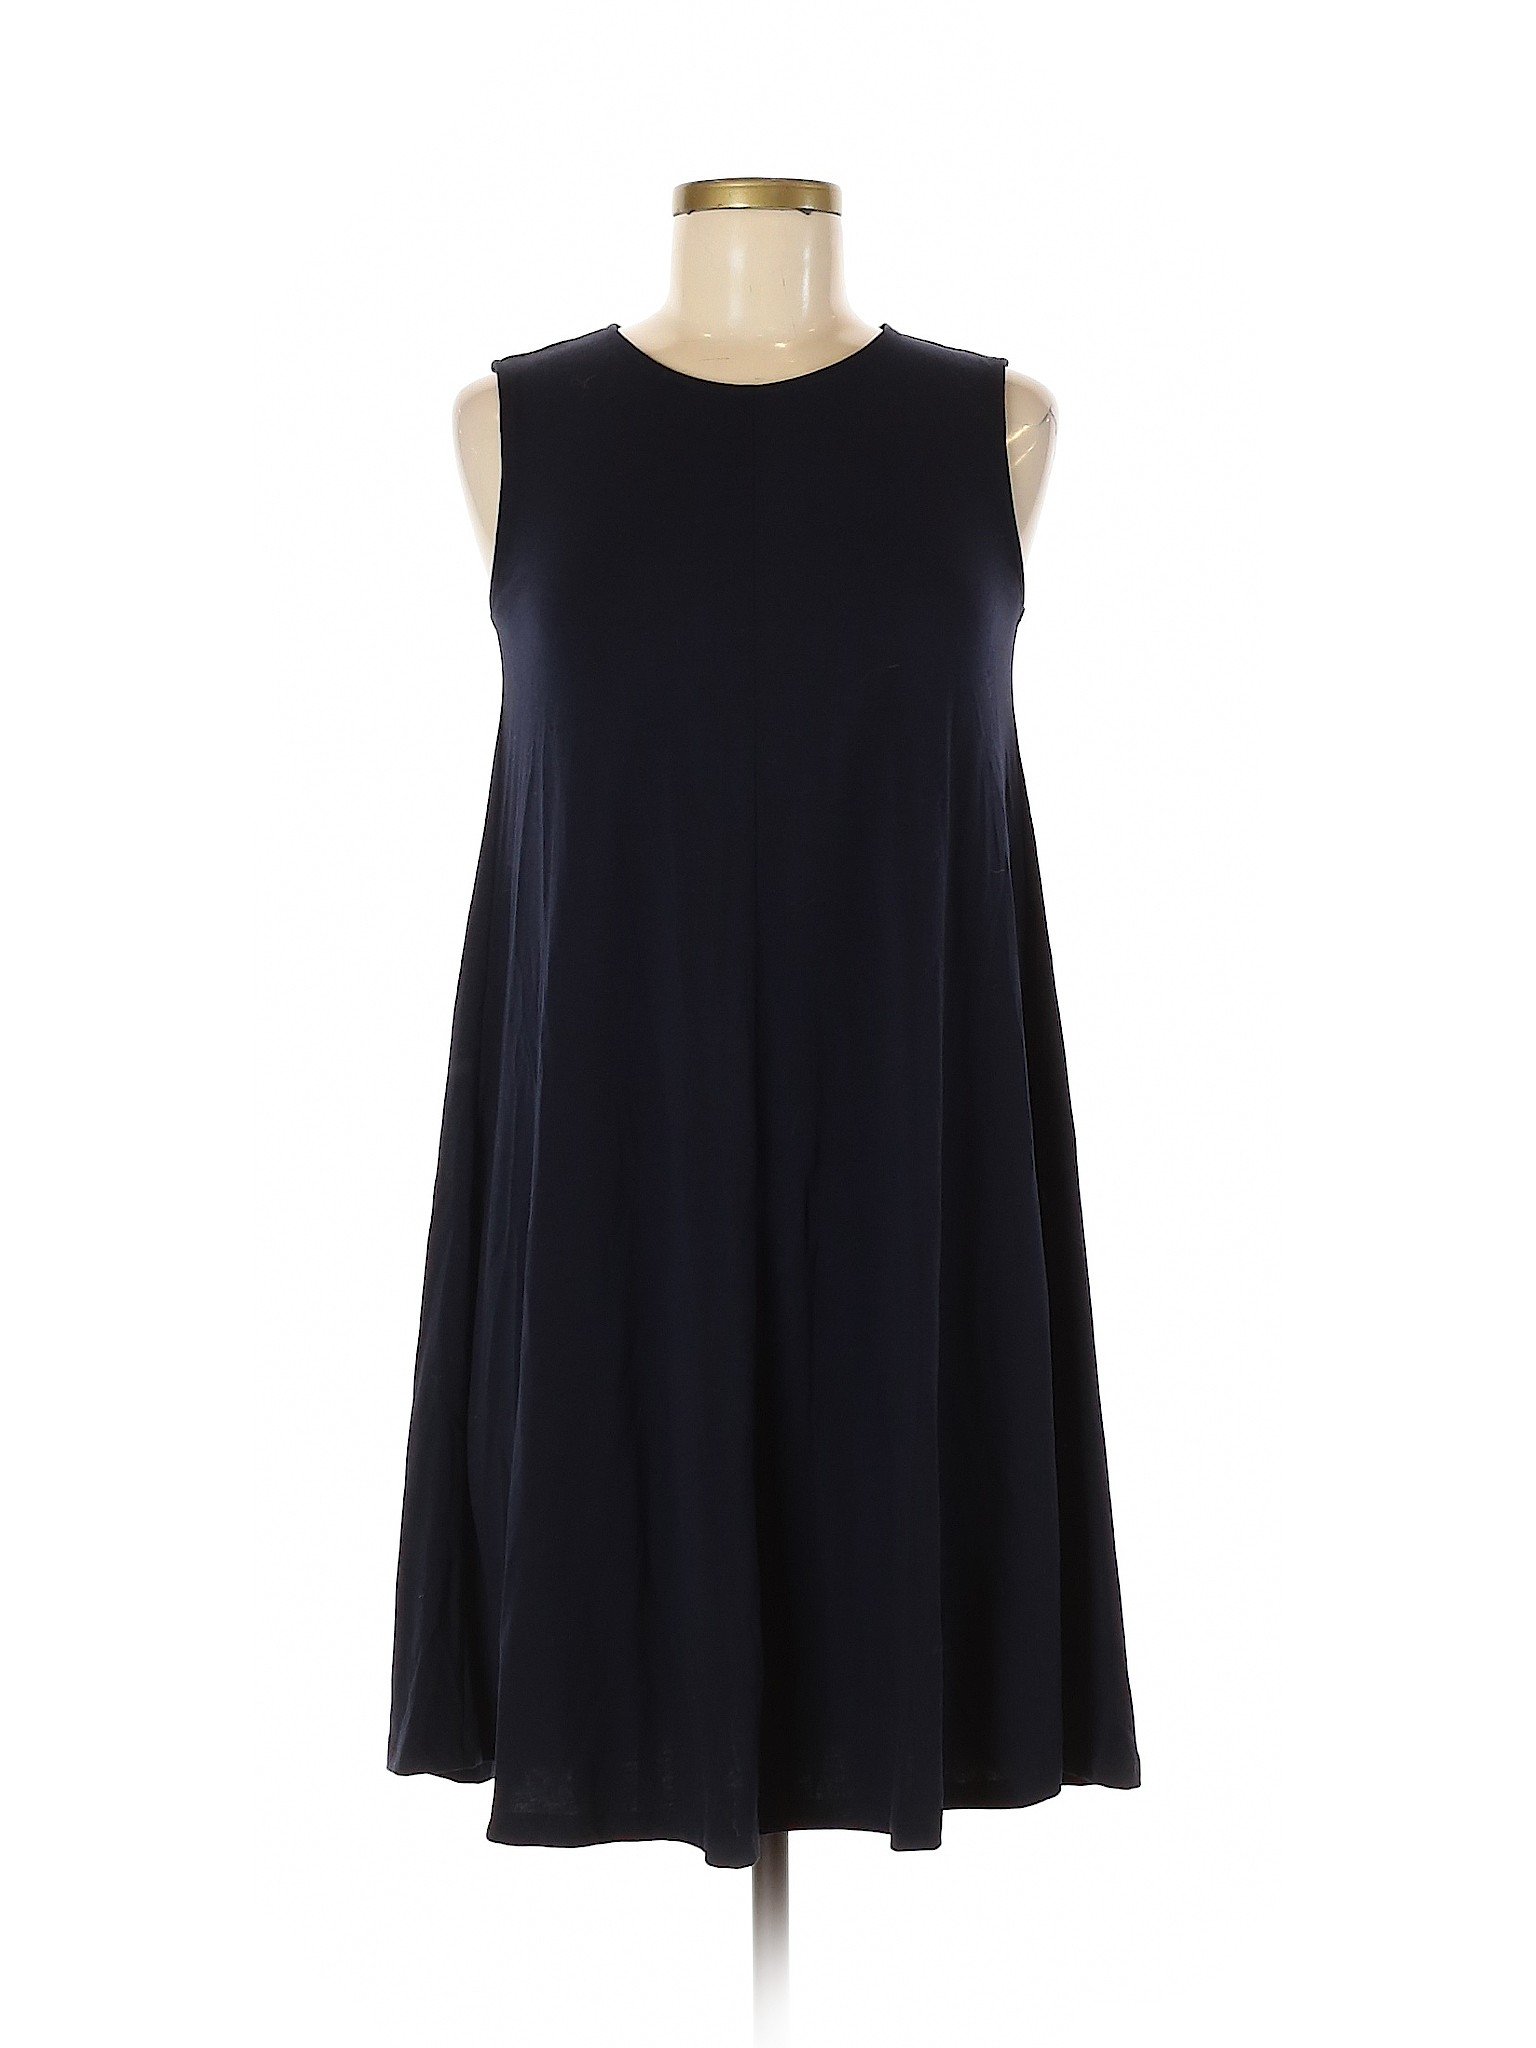 Uniqlo Women Blue Casual Dress XS | eBay